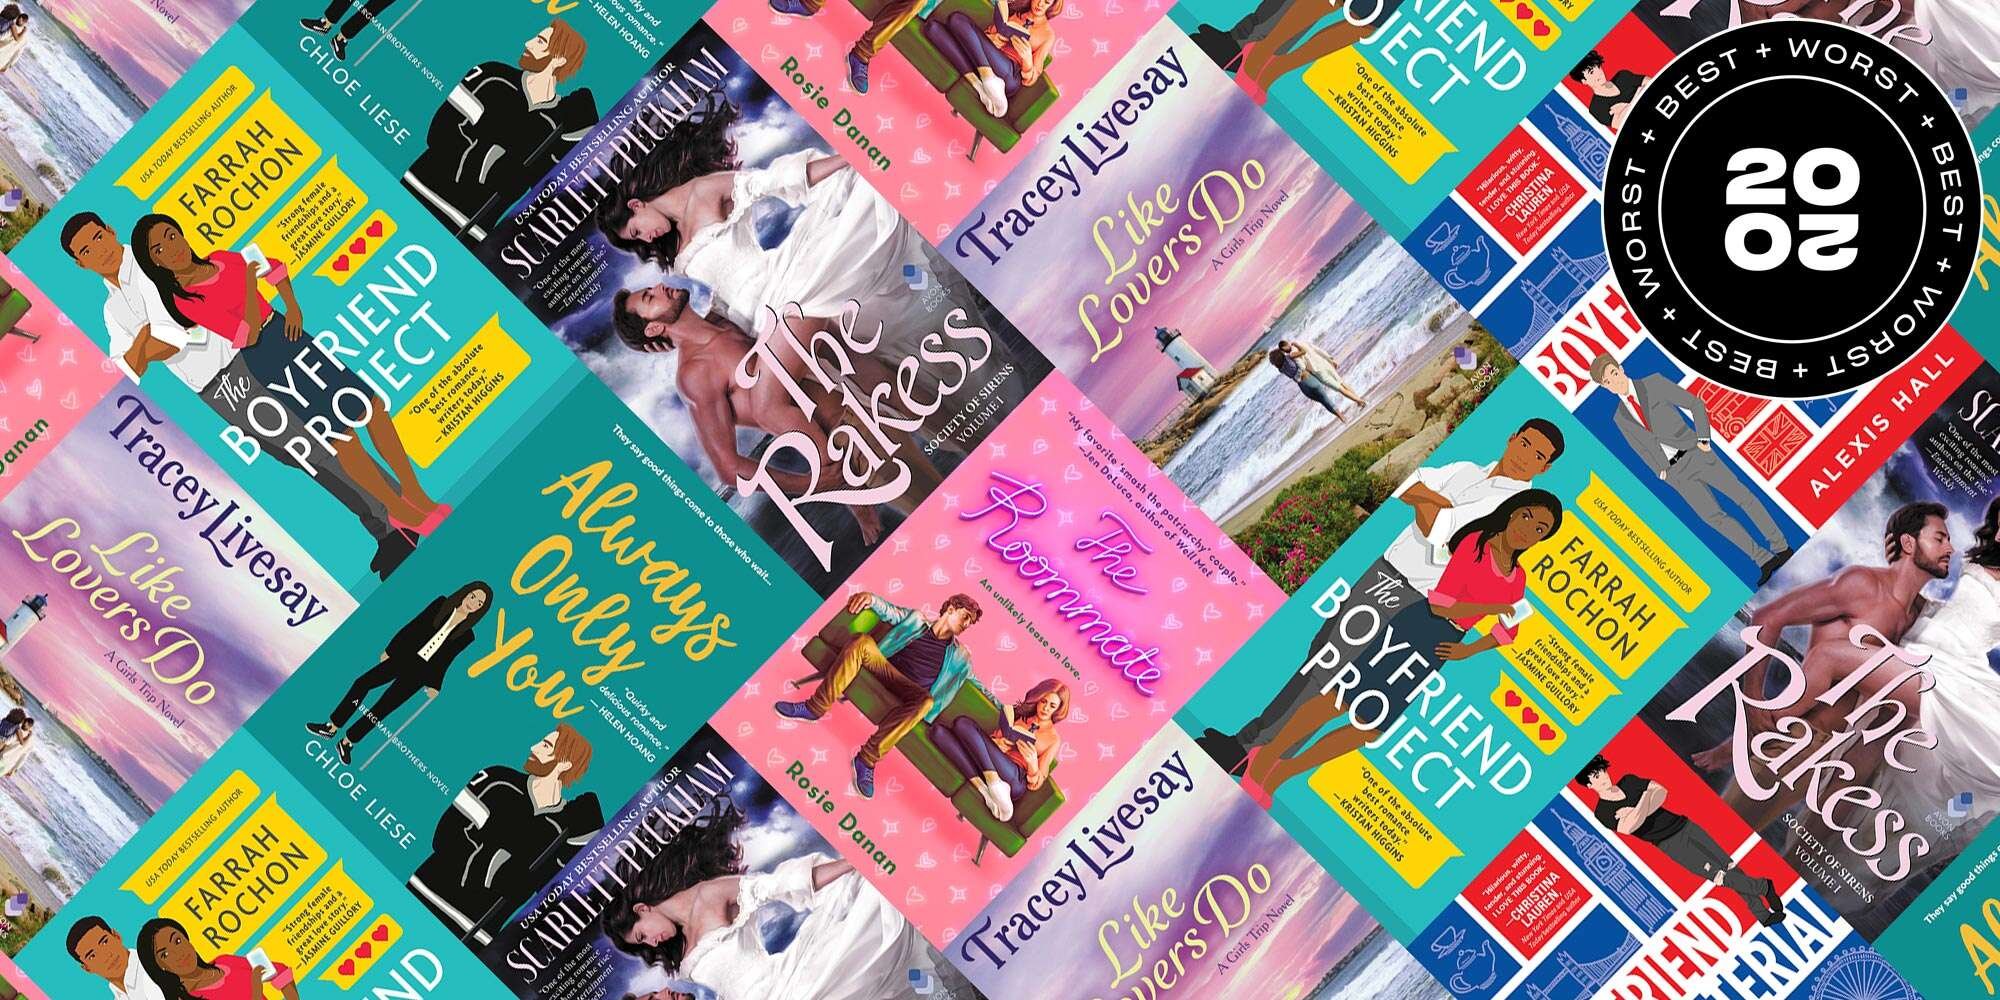 The 10 best romance novels of 2020